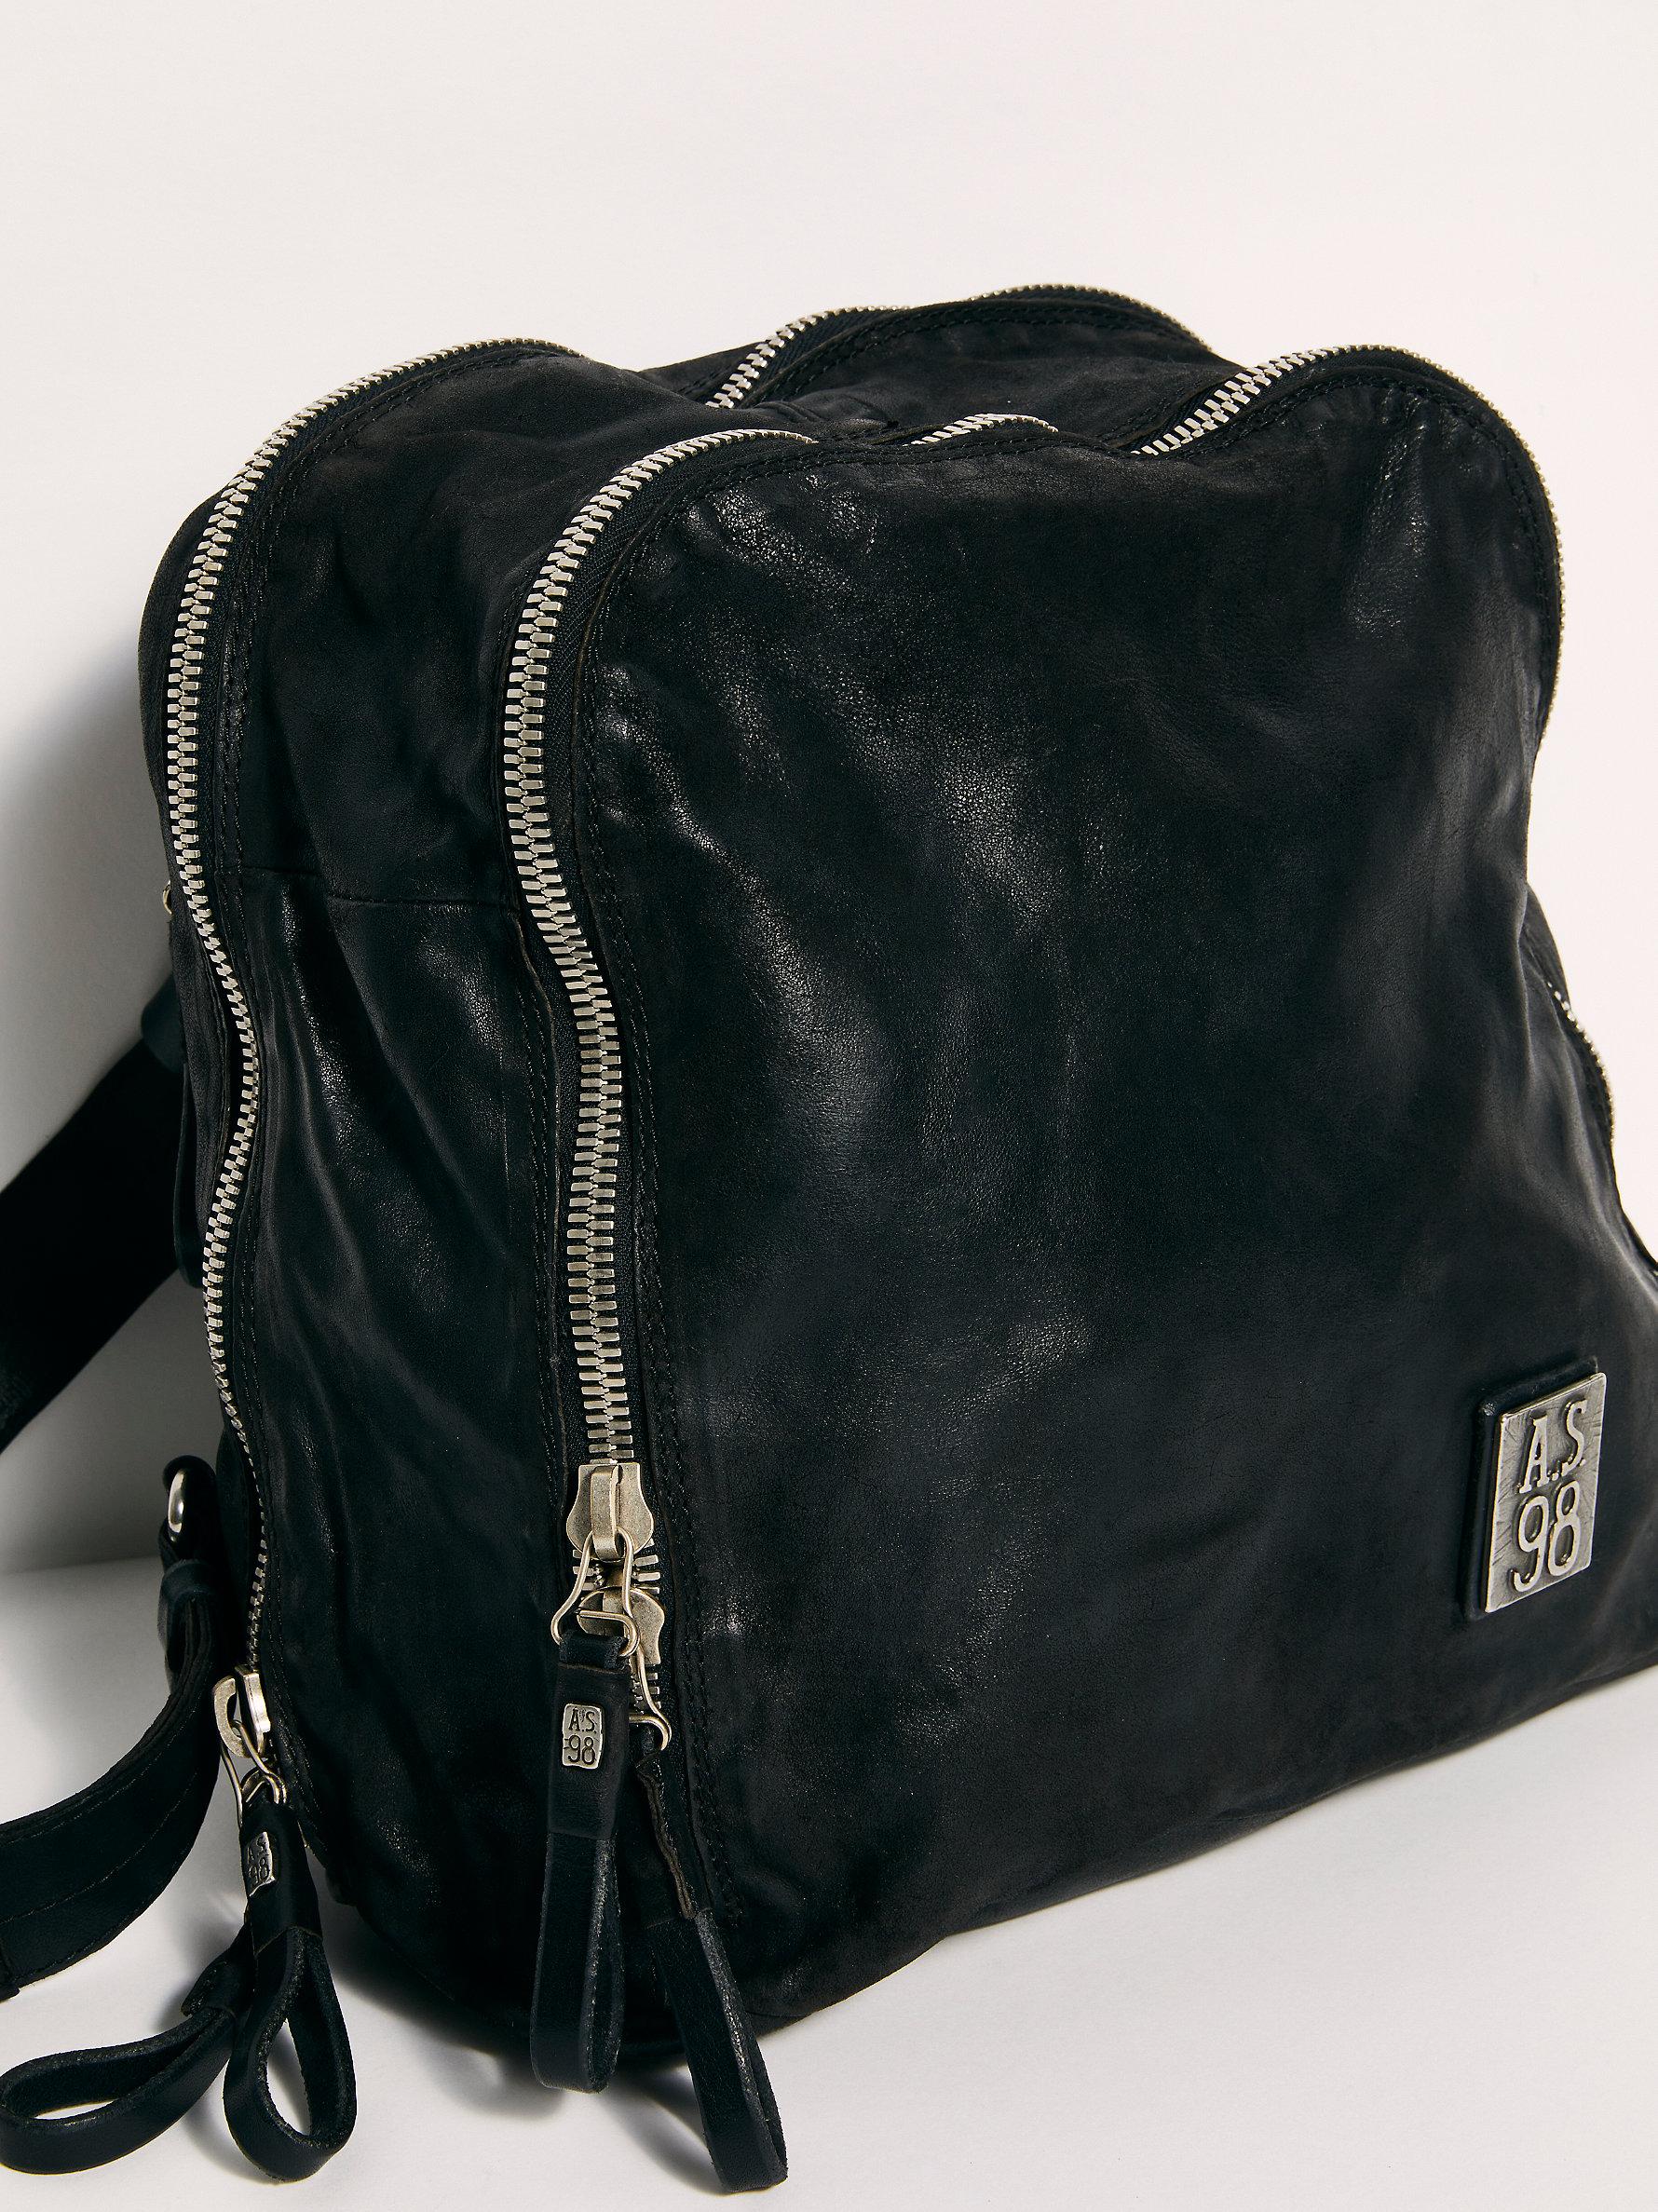 Free People A.s.98 Howe Backpack in Black | Lyst